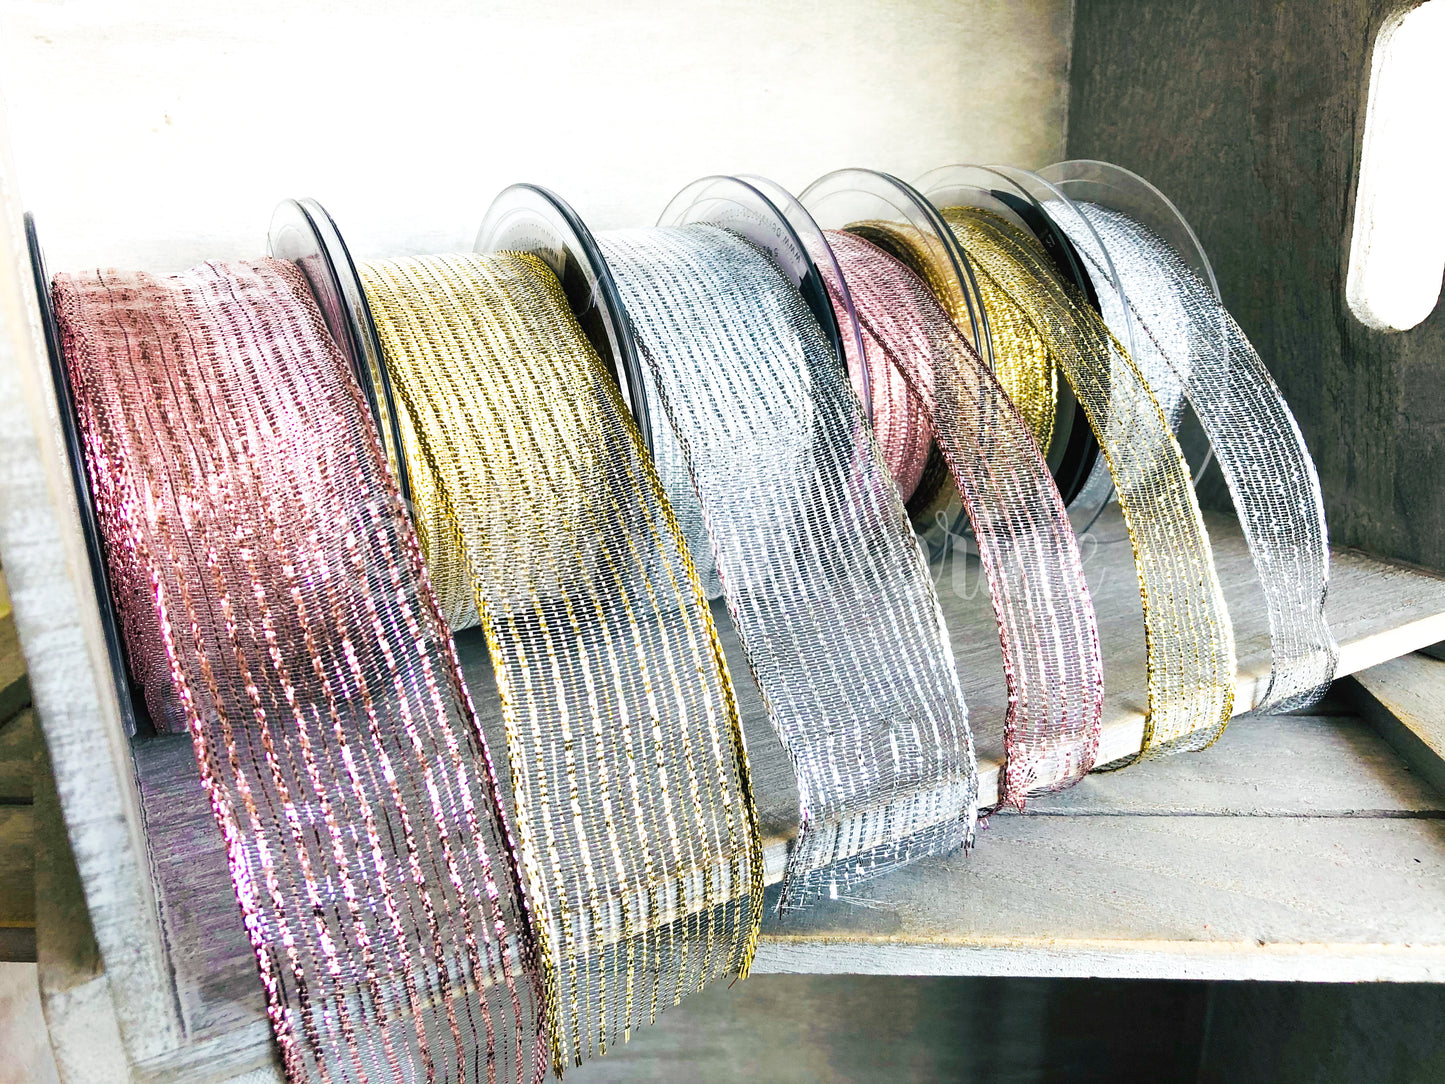 Berisfords Gold Metallic Sparkly Wired Ribbon 1M Cut Piece